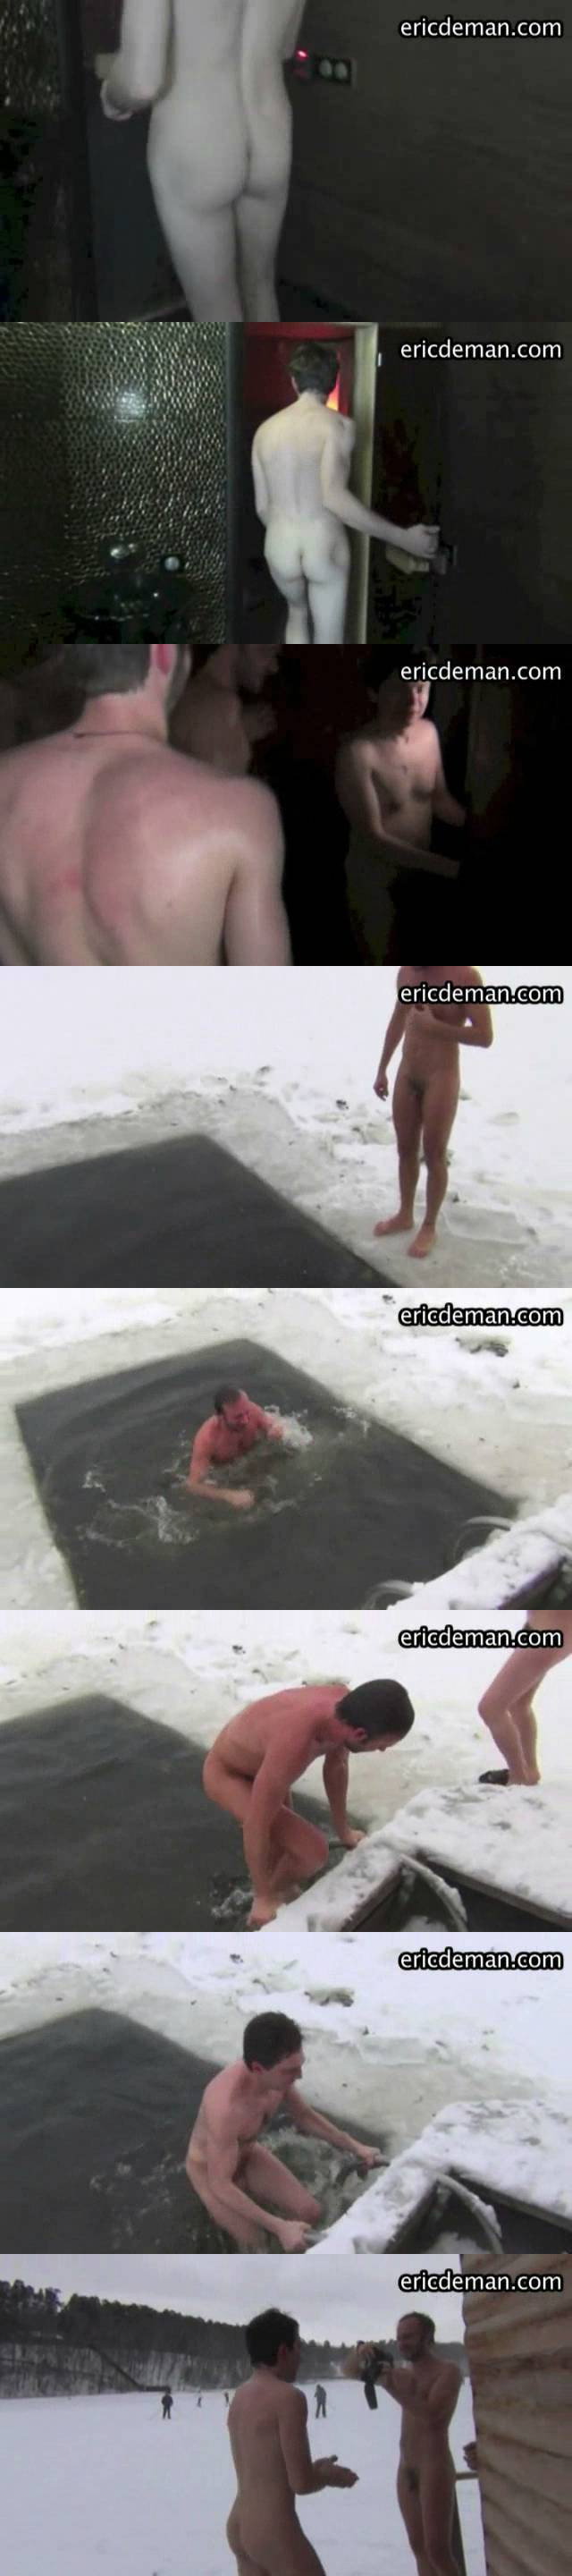 nude guys sauna icy water bath